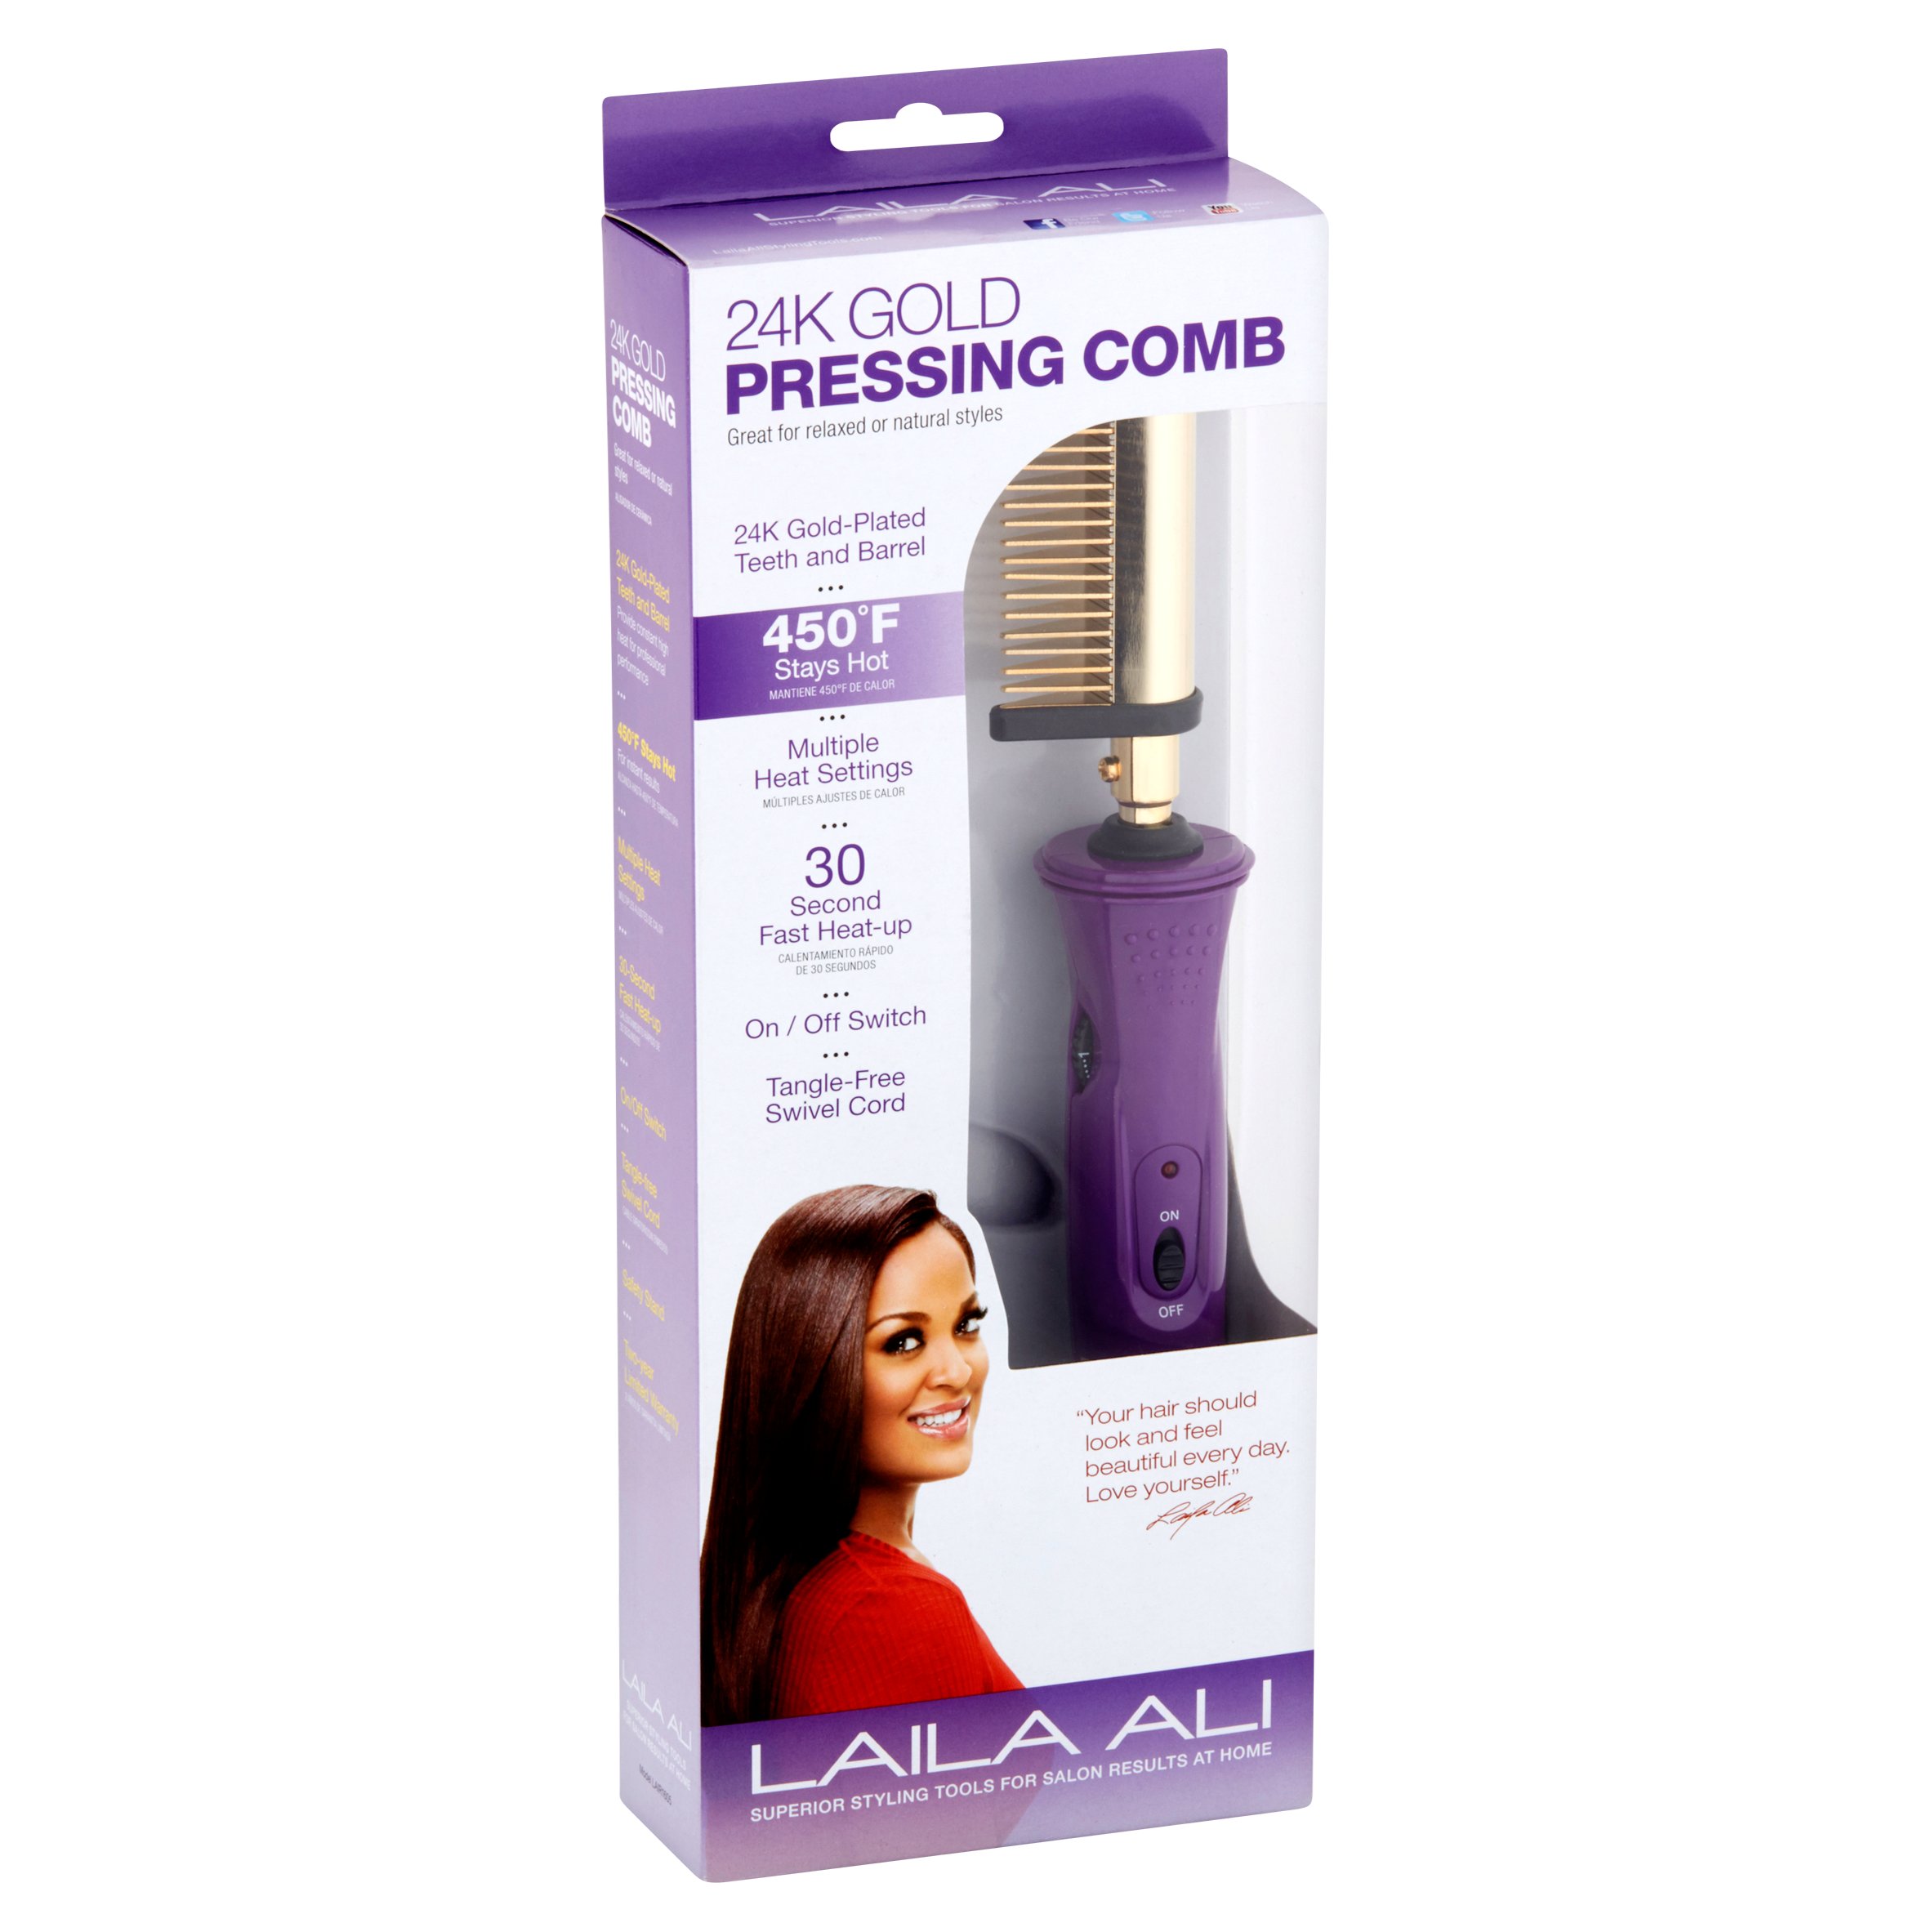 Laila Ali 24K Gold Pressing Comb - image 2 of 4